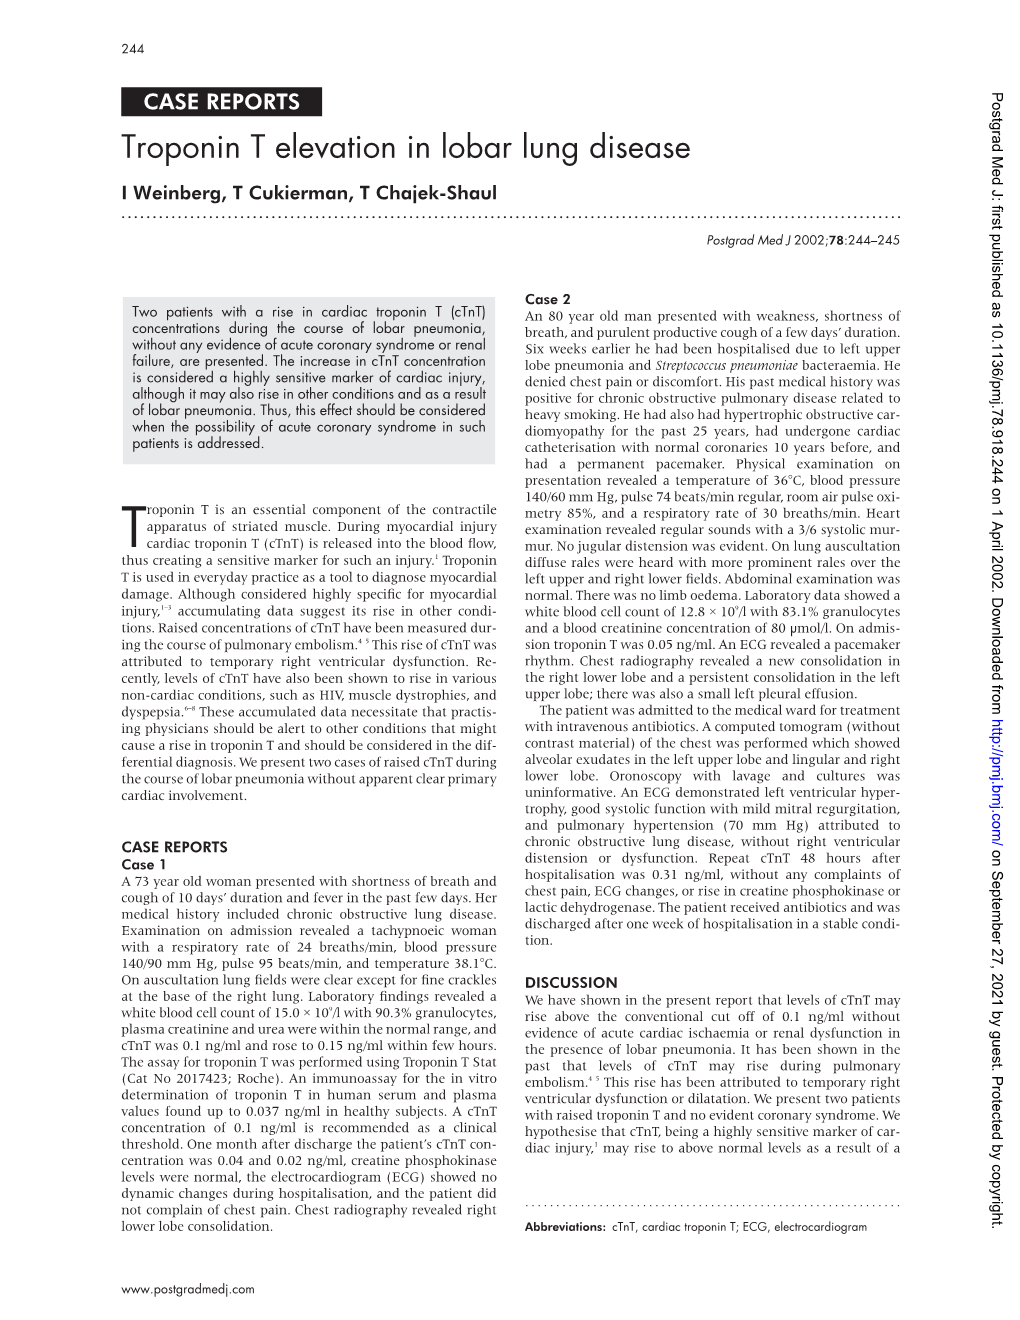 Troponin T Elevation in Lobar Lung Disease I Weinberg, T Cukierman, T Chajek-Shaul